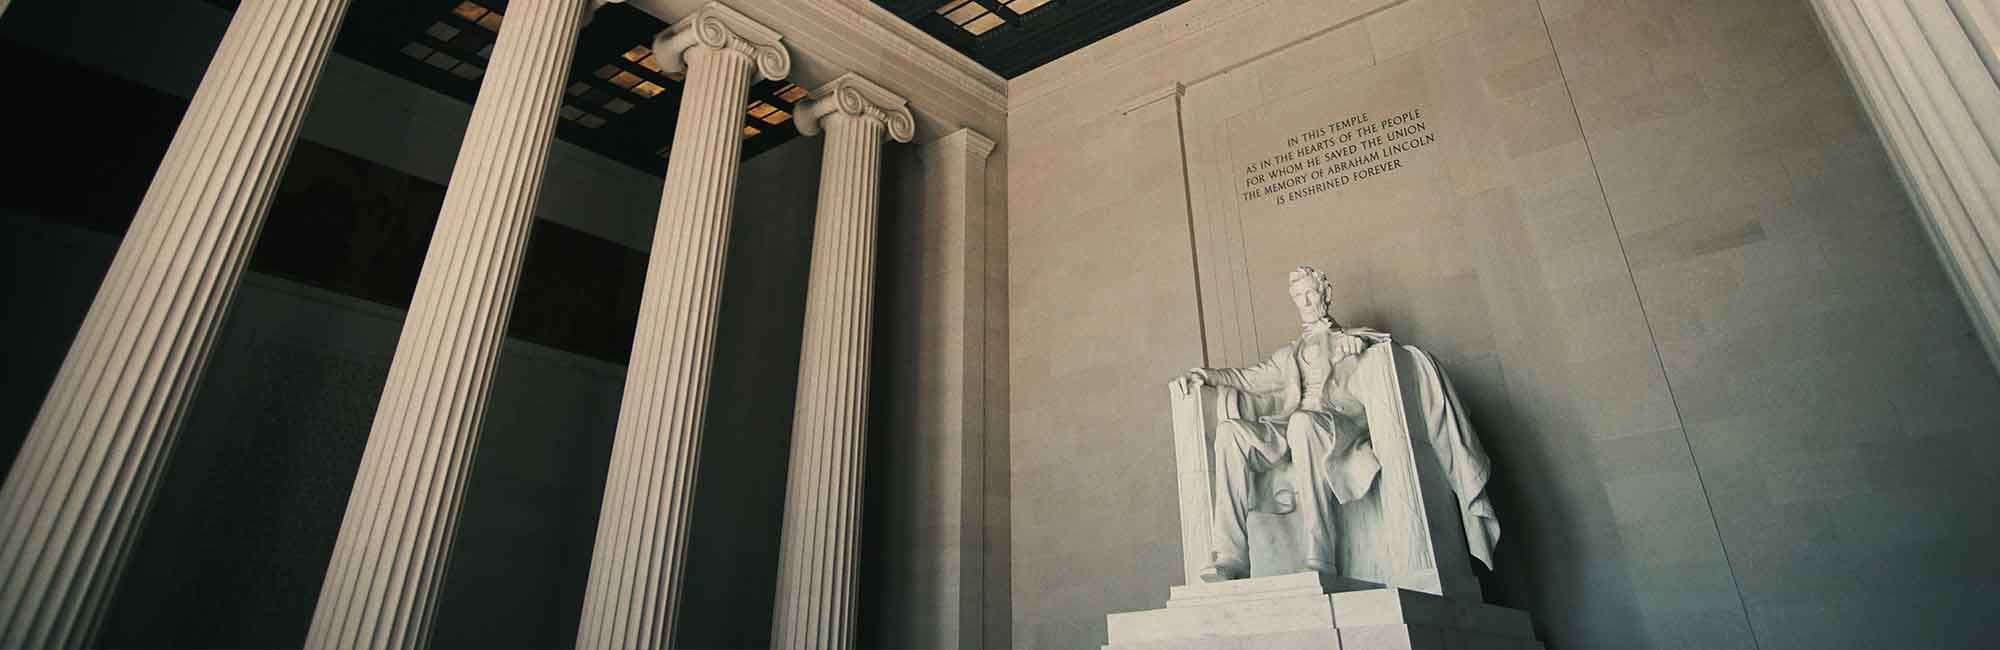 Posąg Abrahama Lincolna